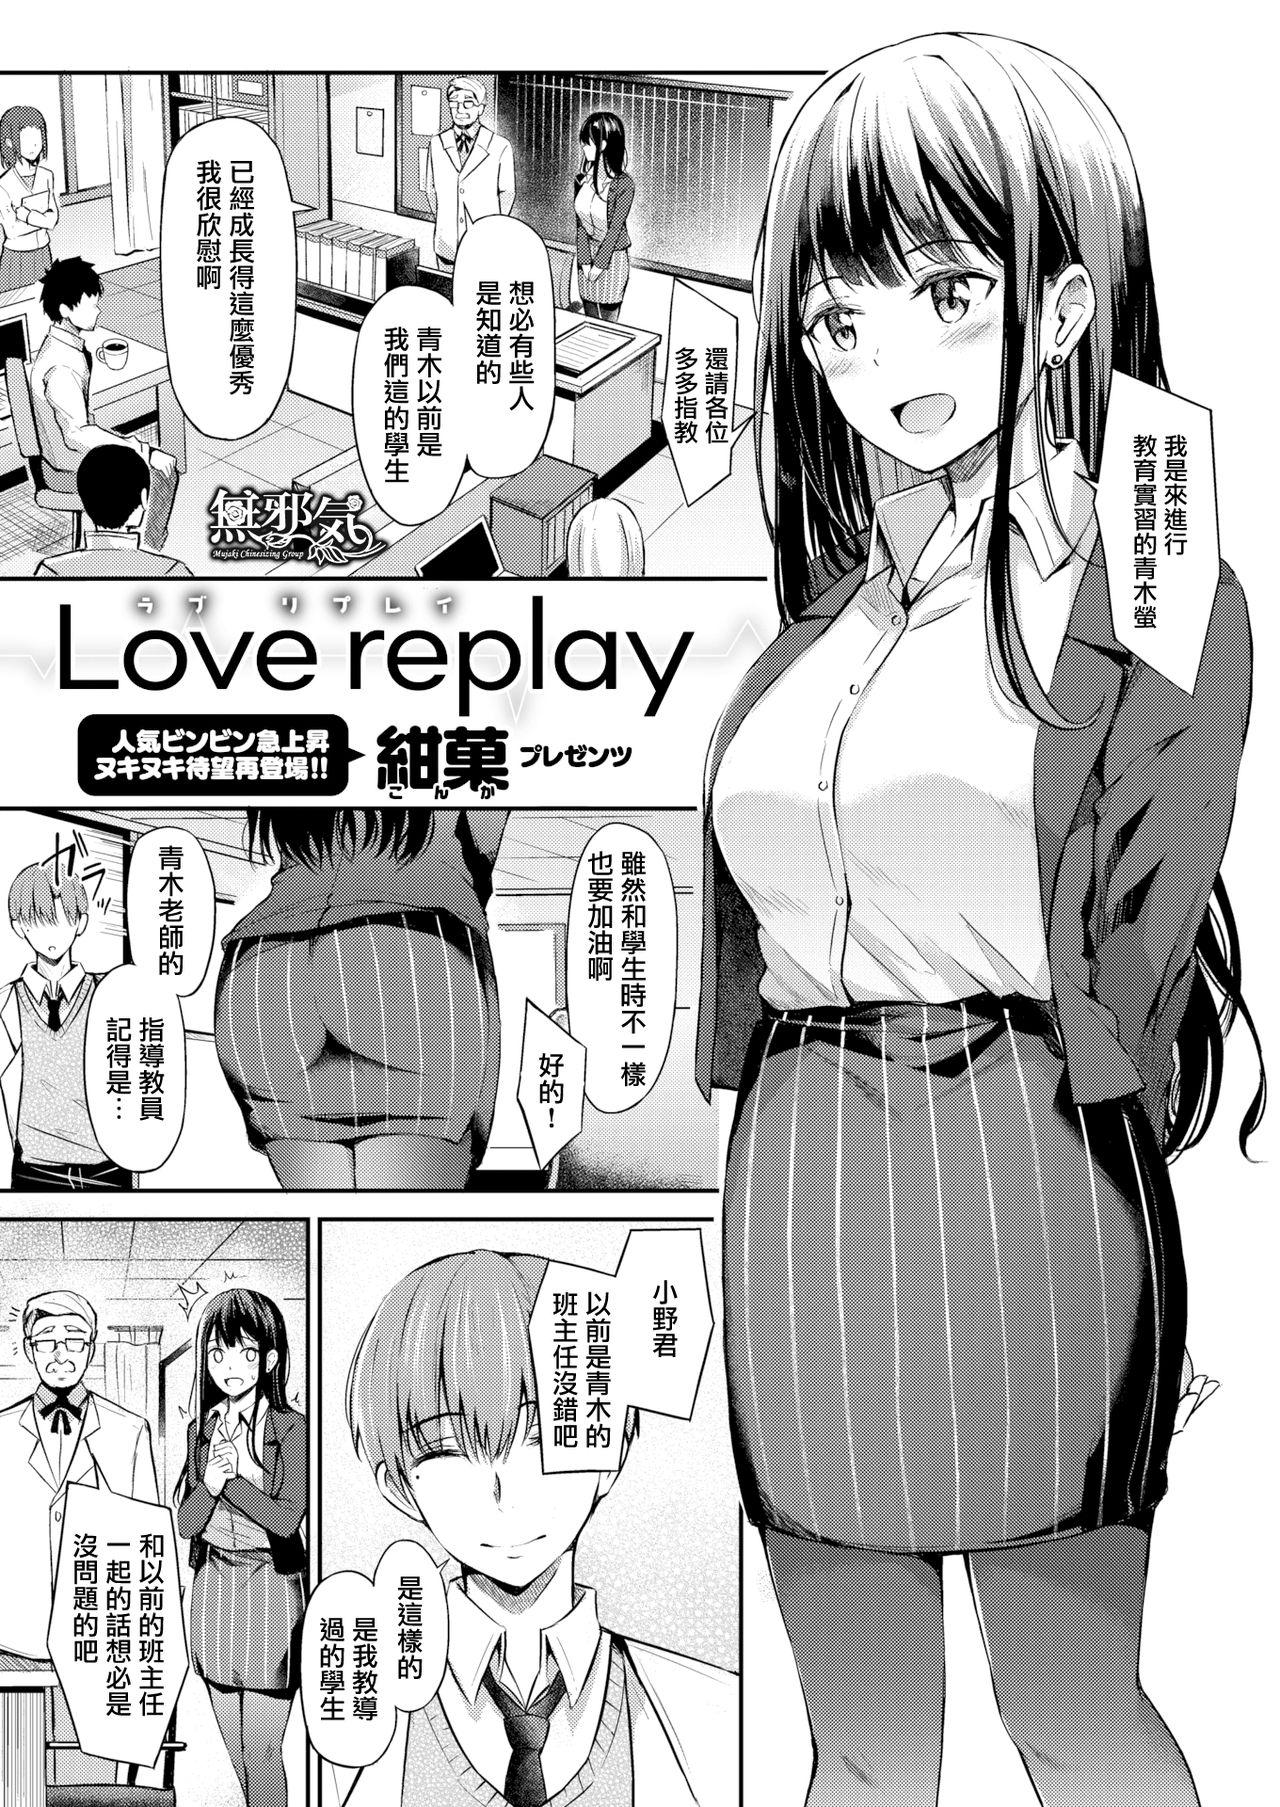 Lez Love replay Tease - Page 1